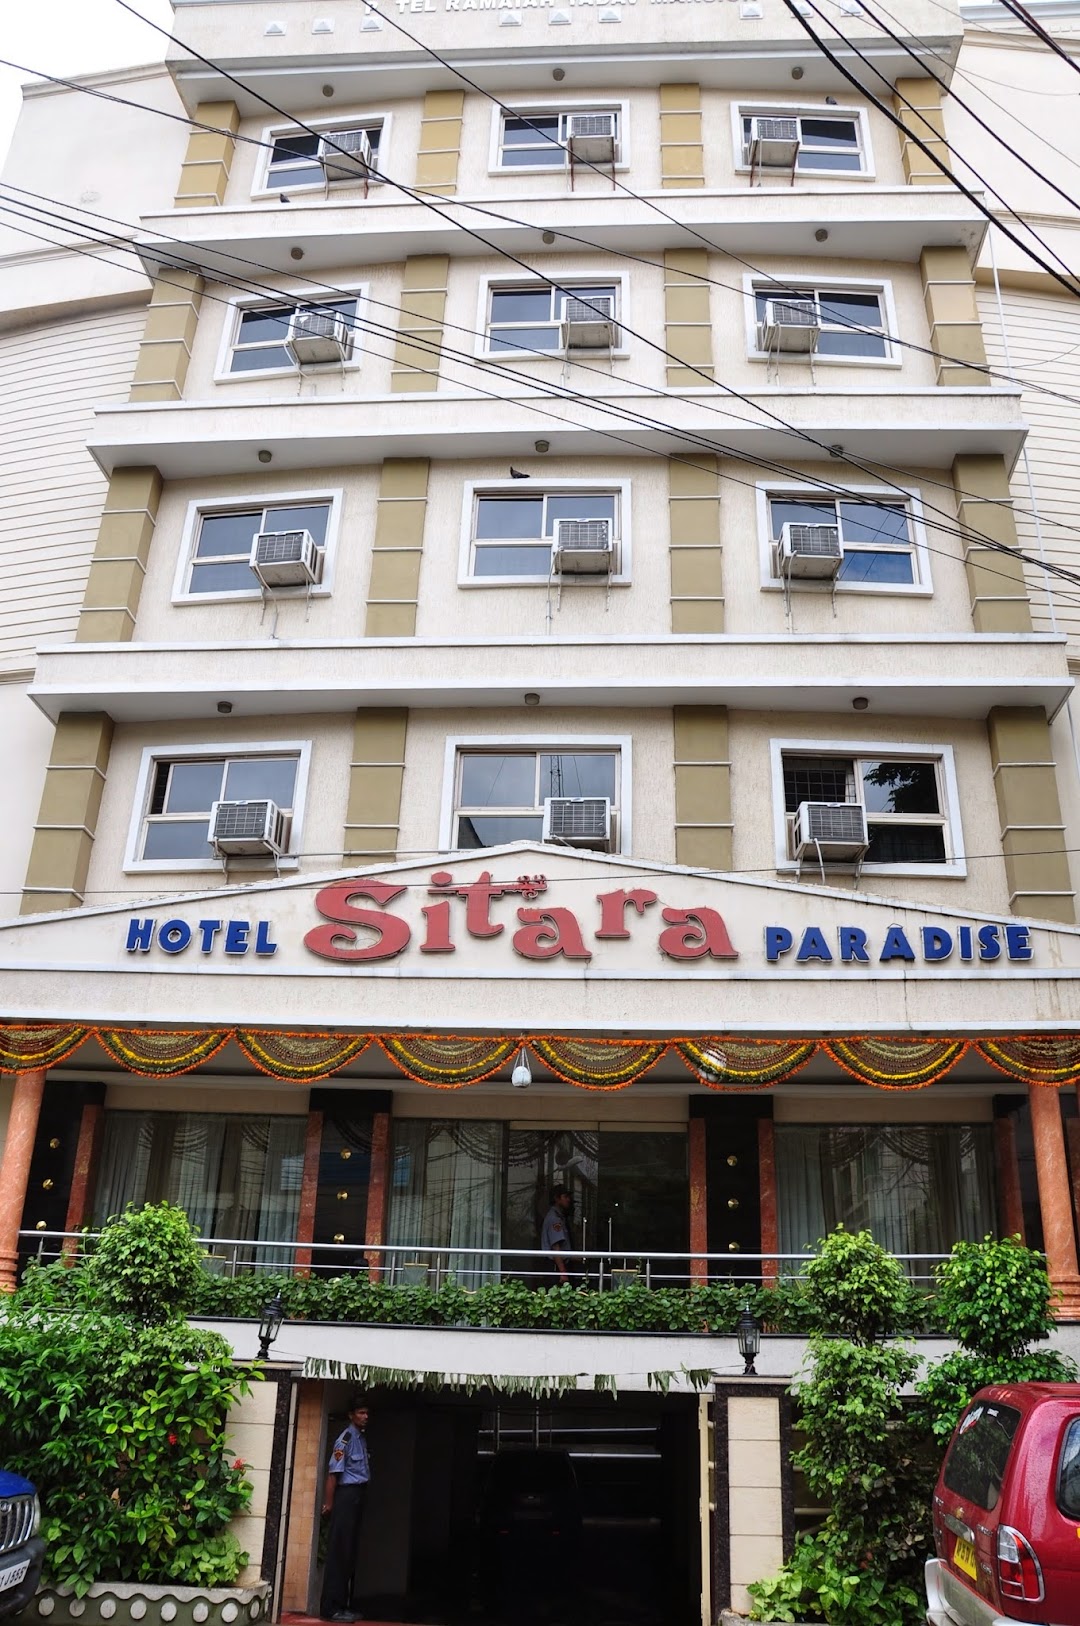 Hotel Sitara Paradise - Ameerpet